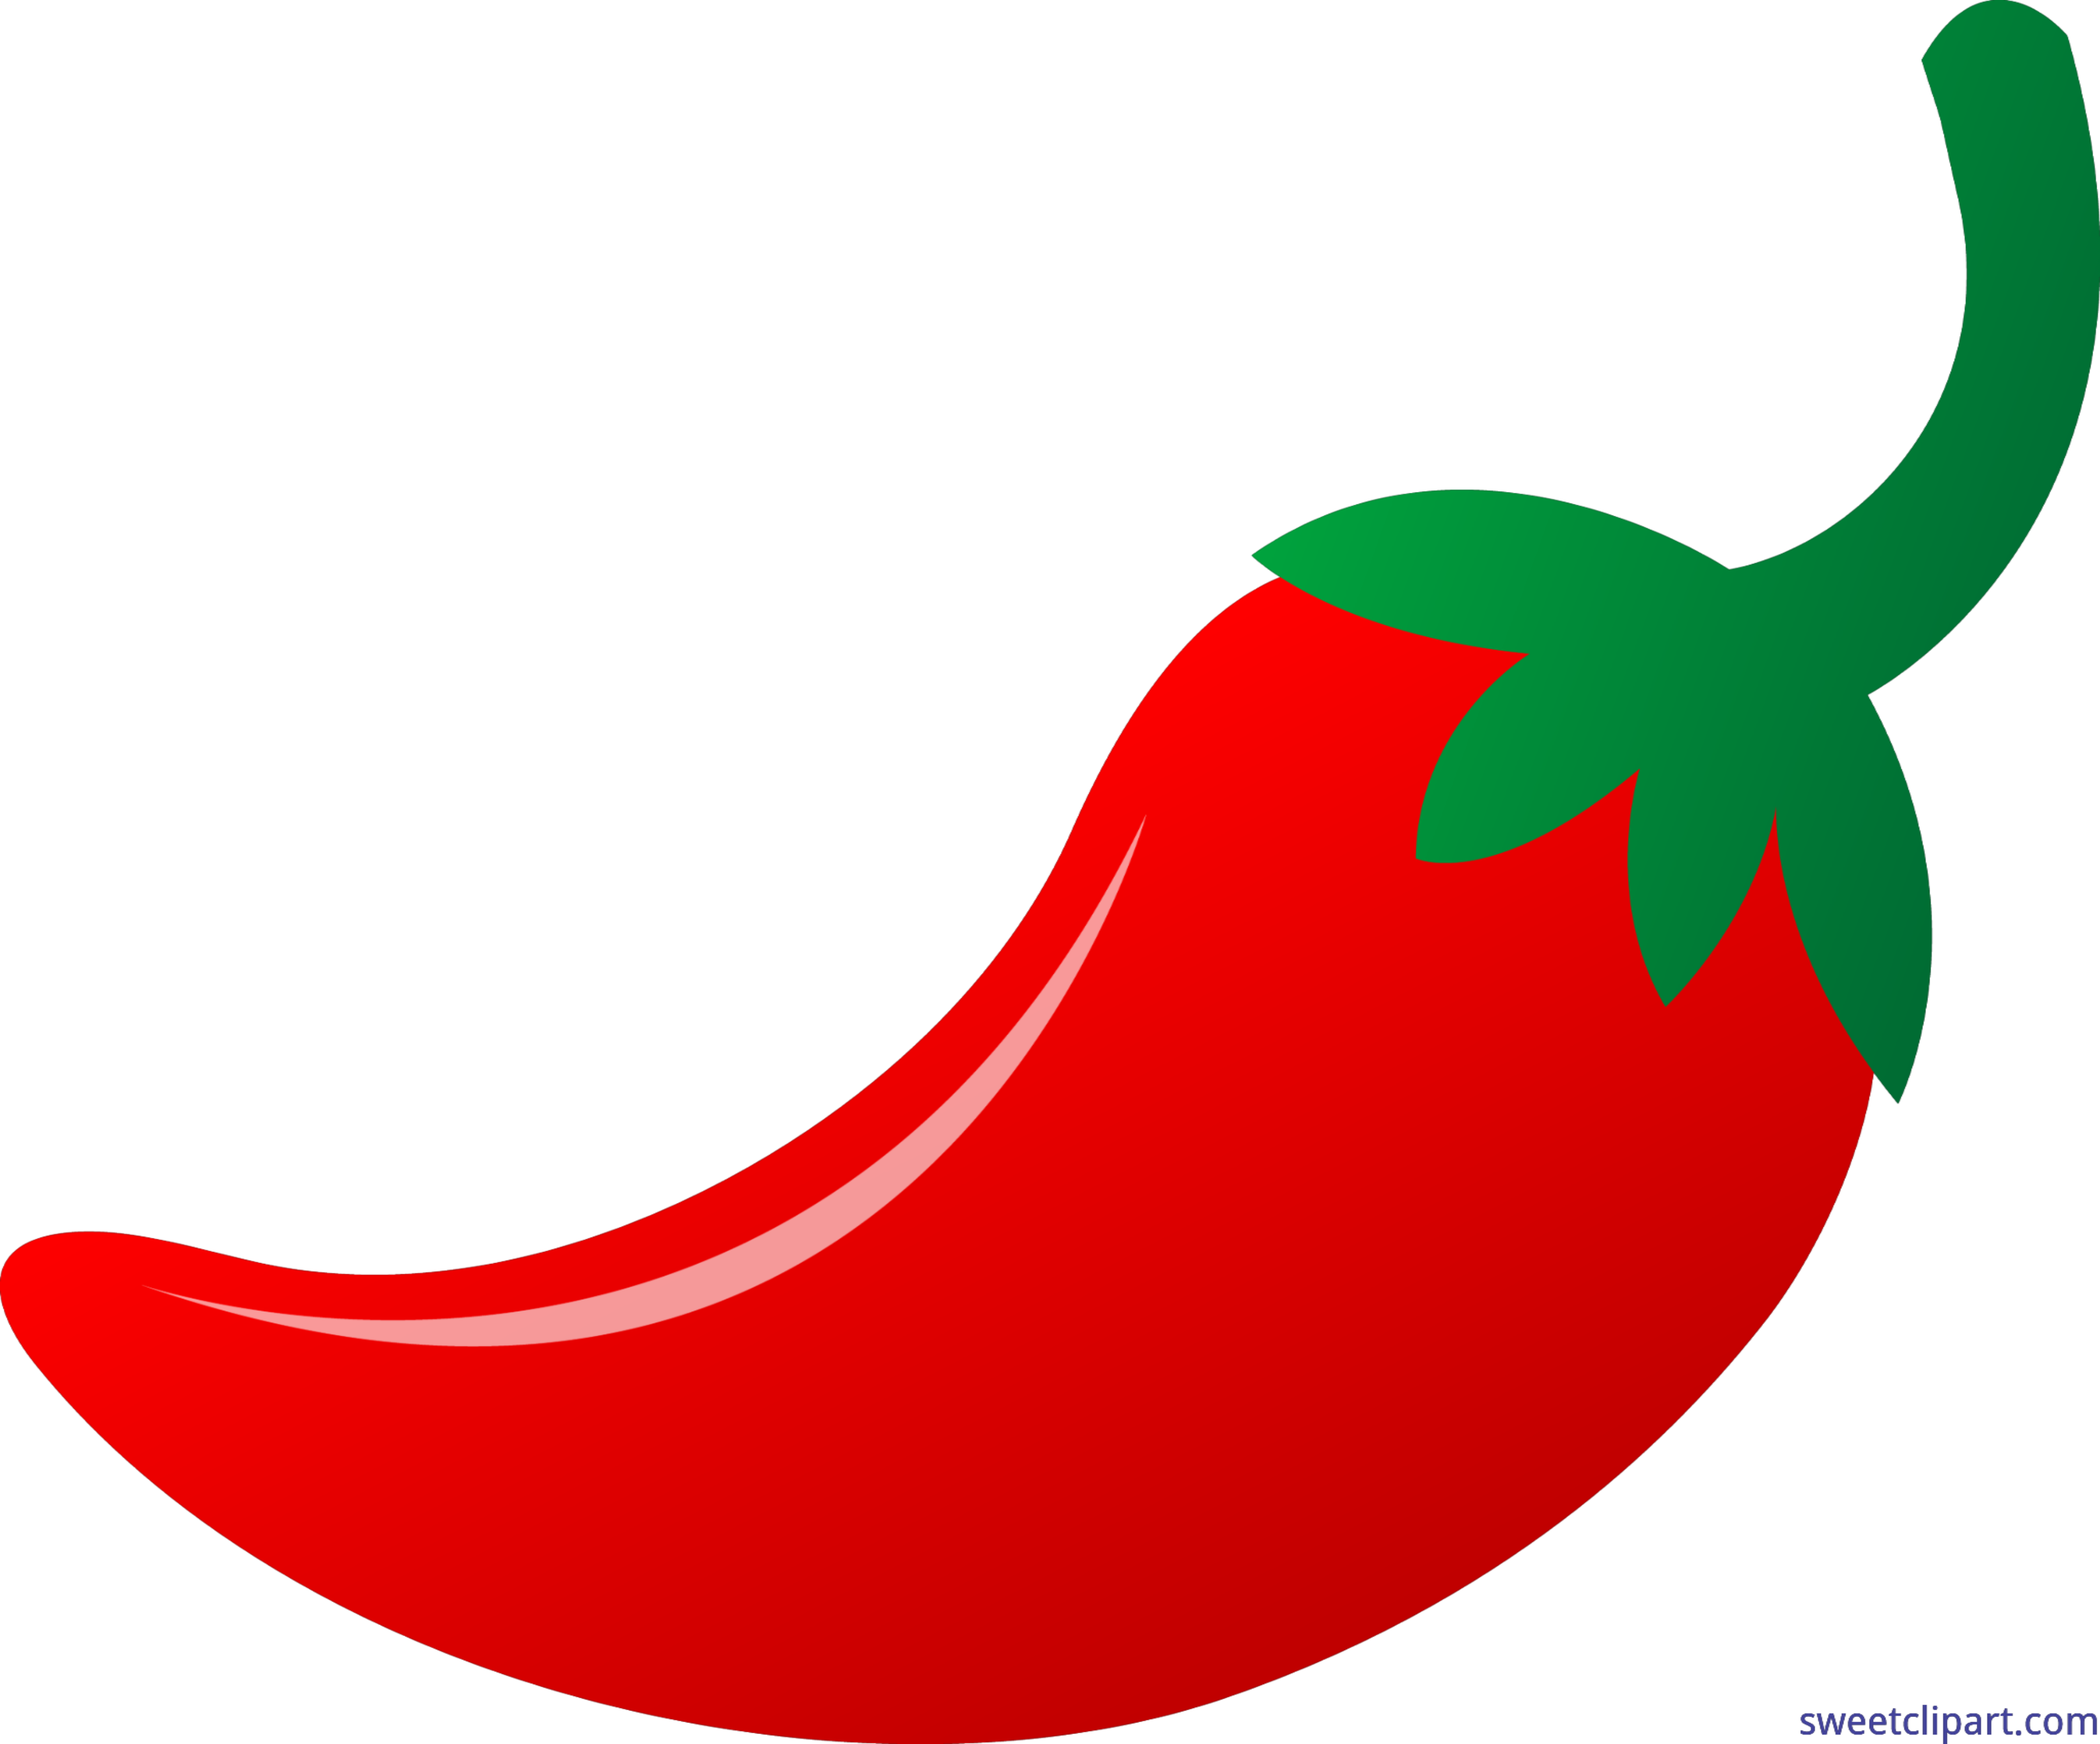 Red chili clip art. Pepper clipart